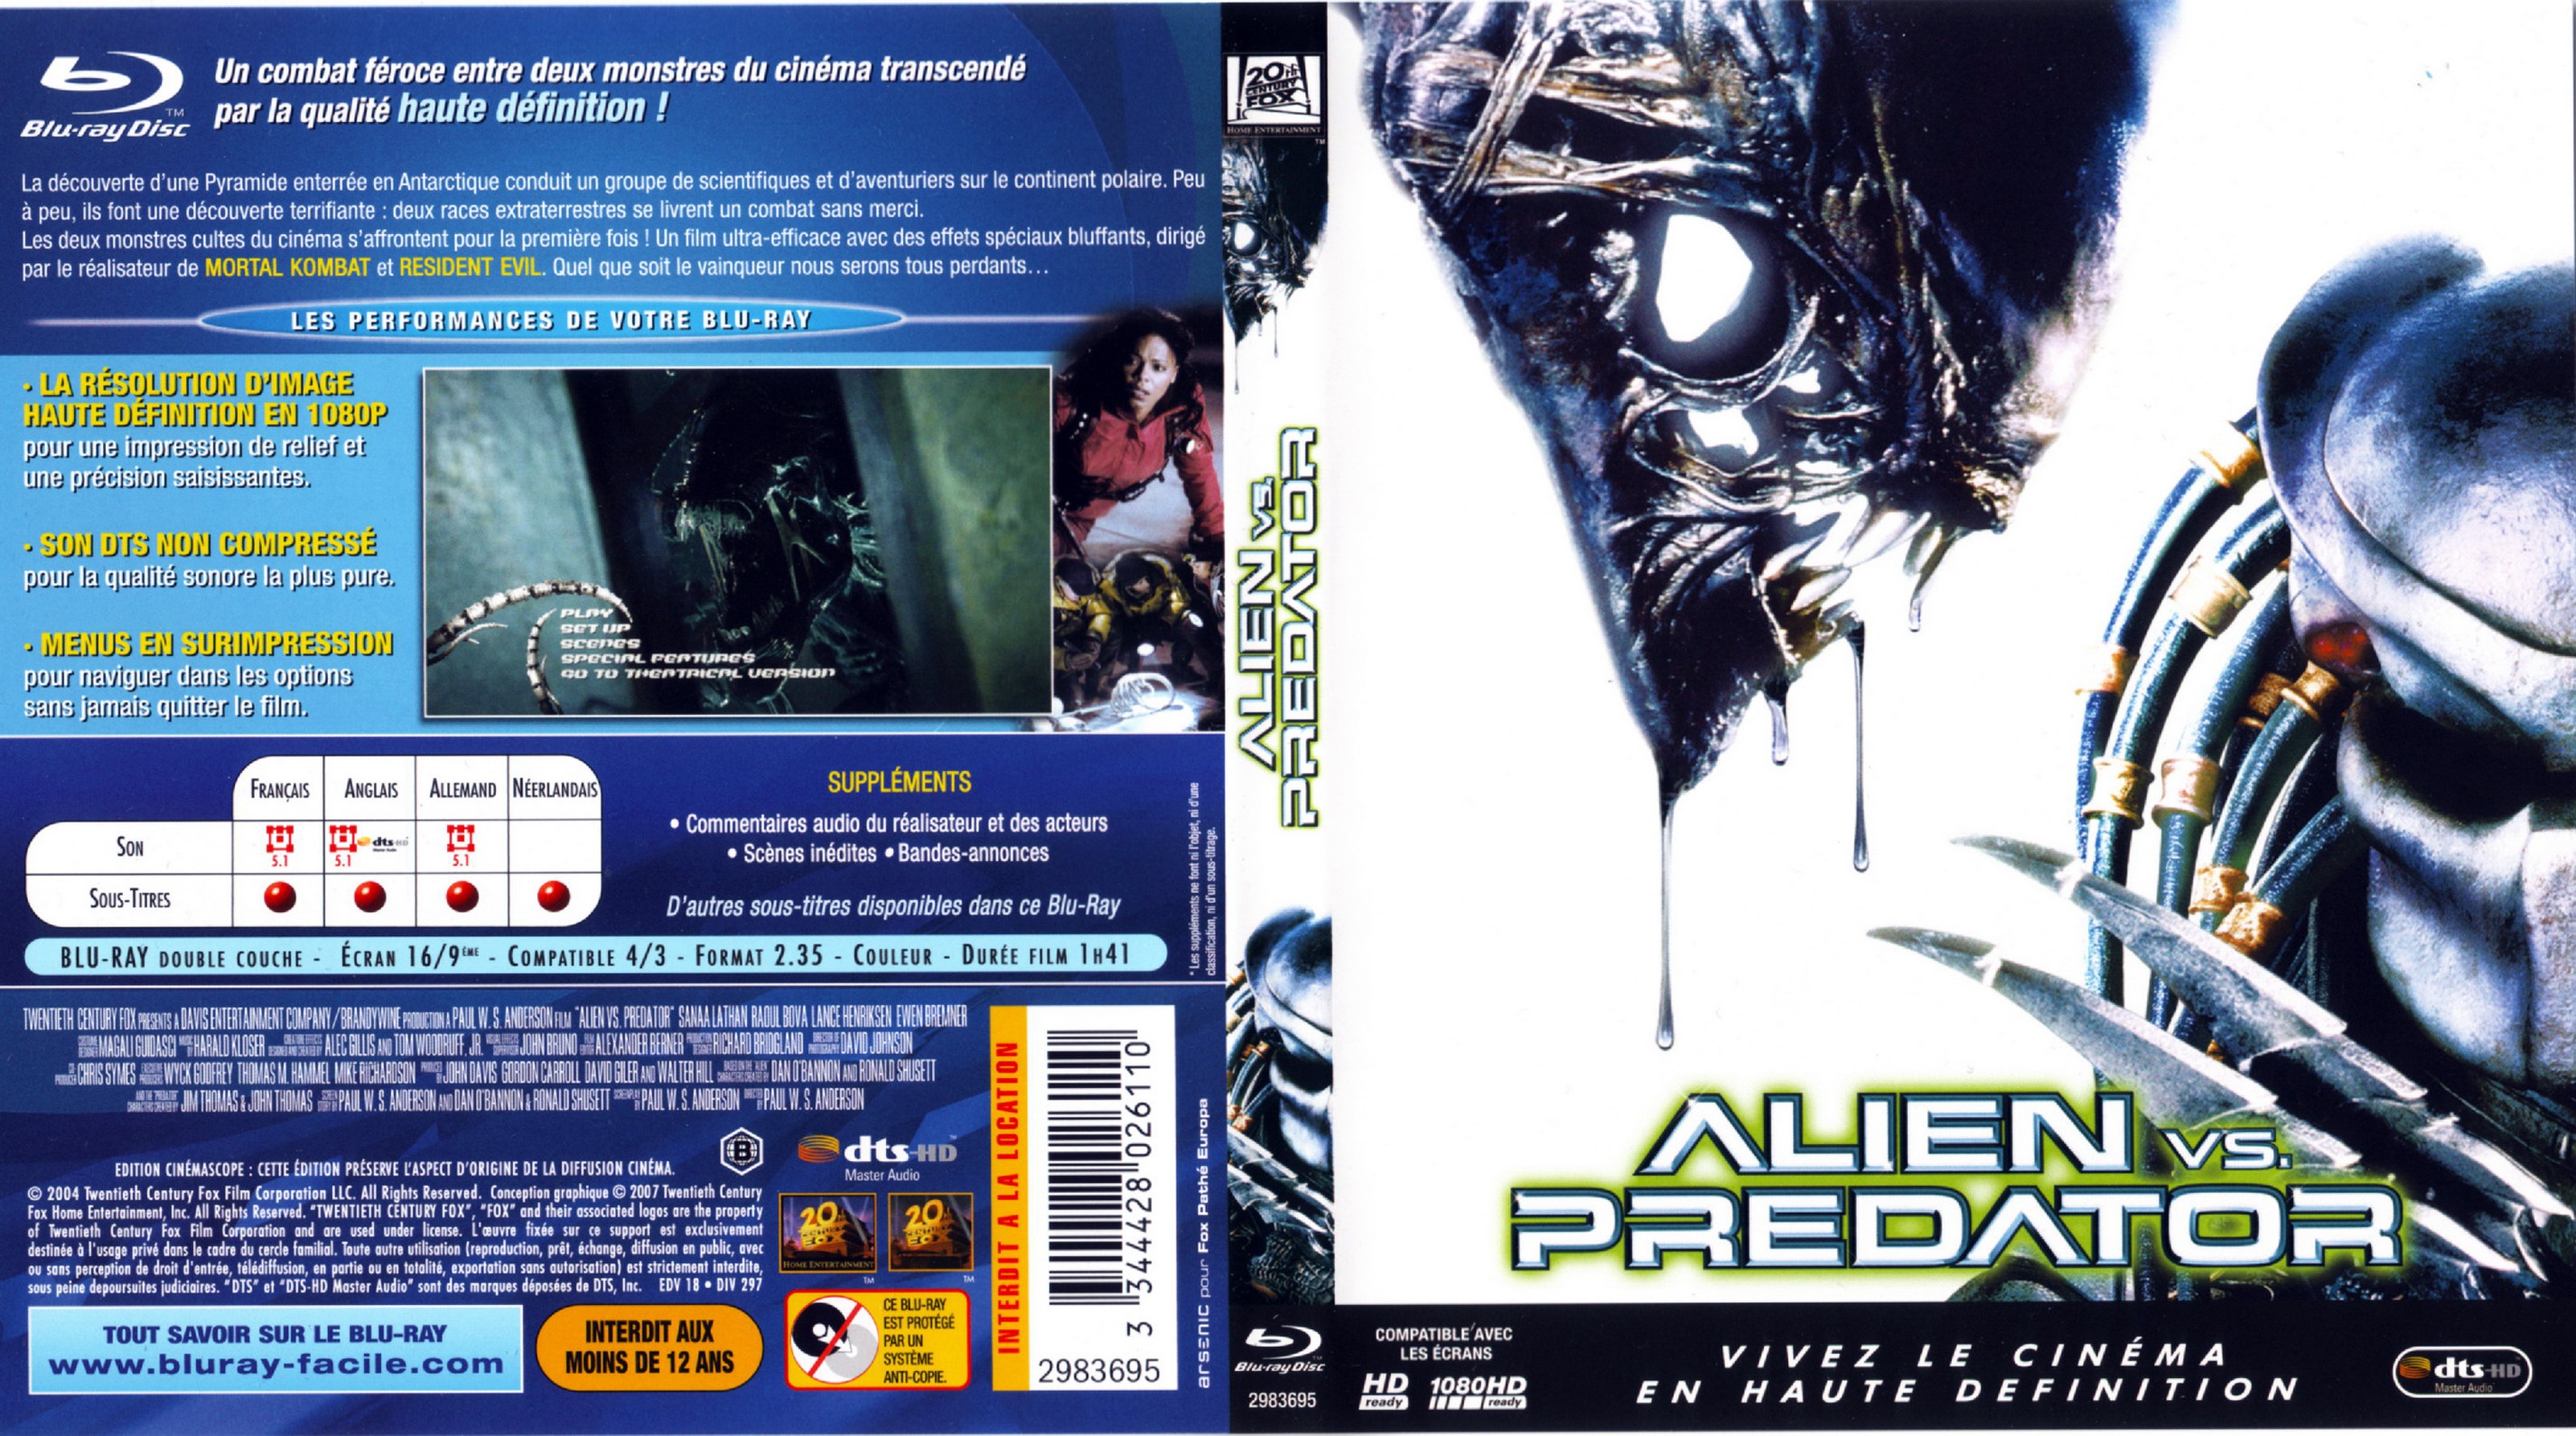 Jaquette DVD Alien vs predator (BLU-RAY)